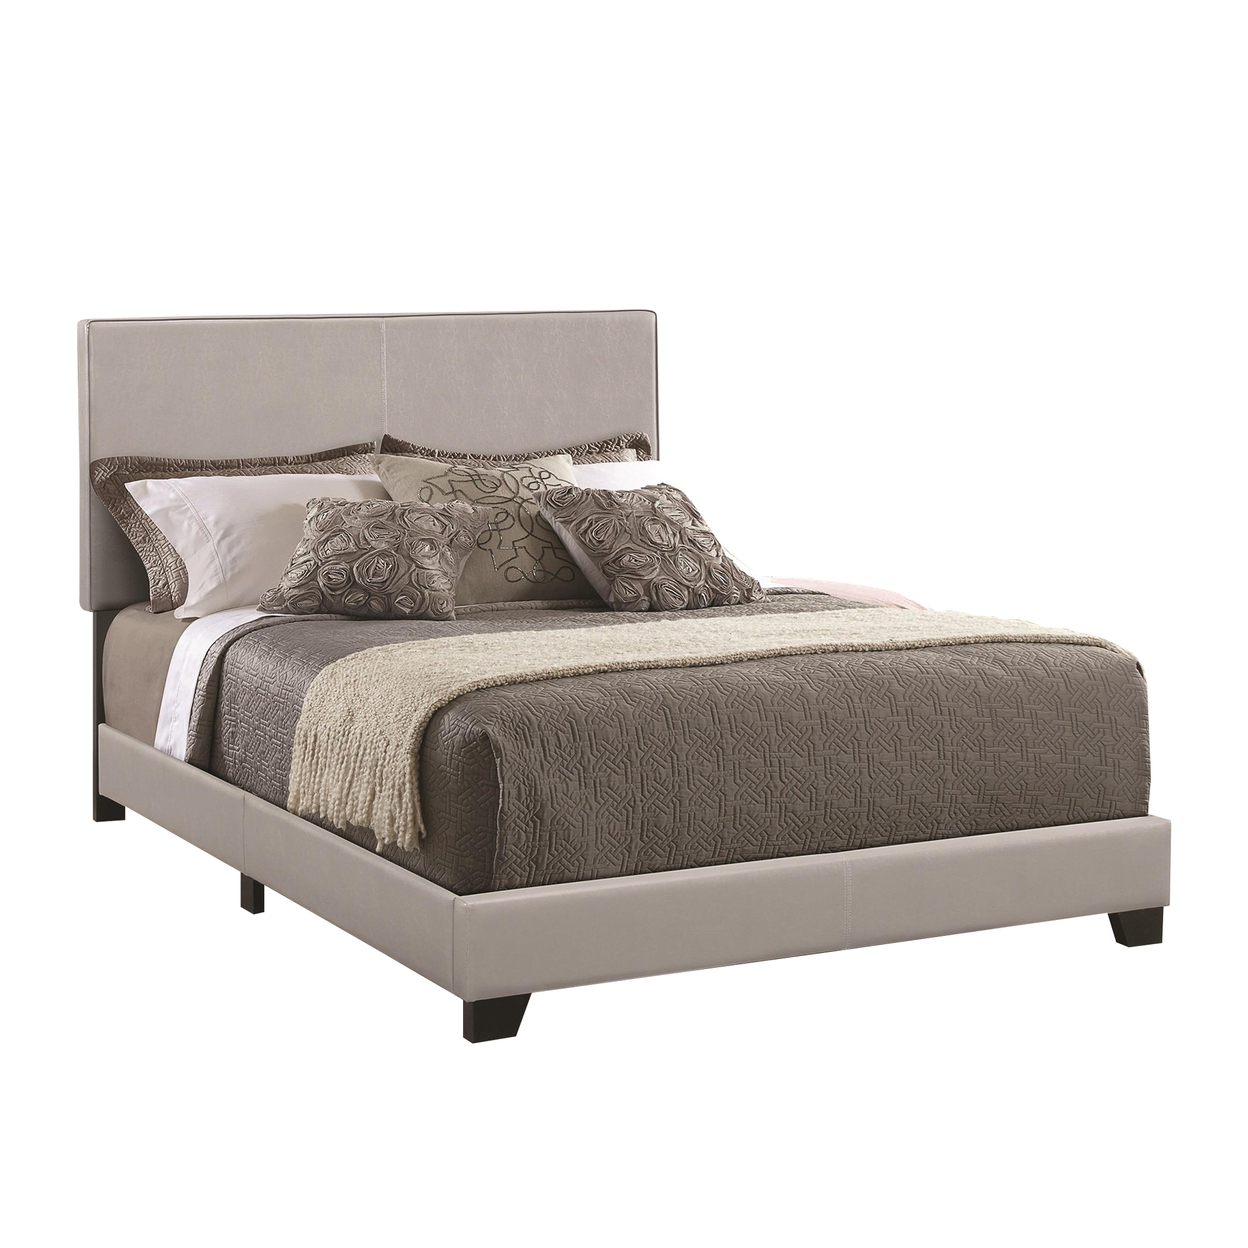 Leather Upholstered Twin Size Platform Bed, Gray- Saltoro Sherpi